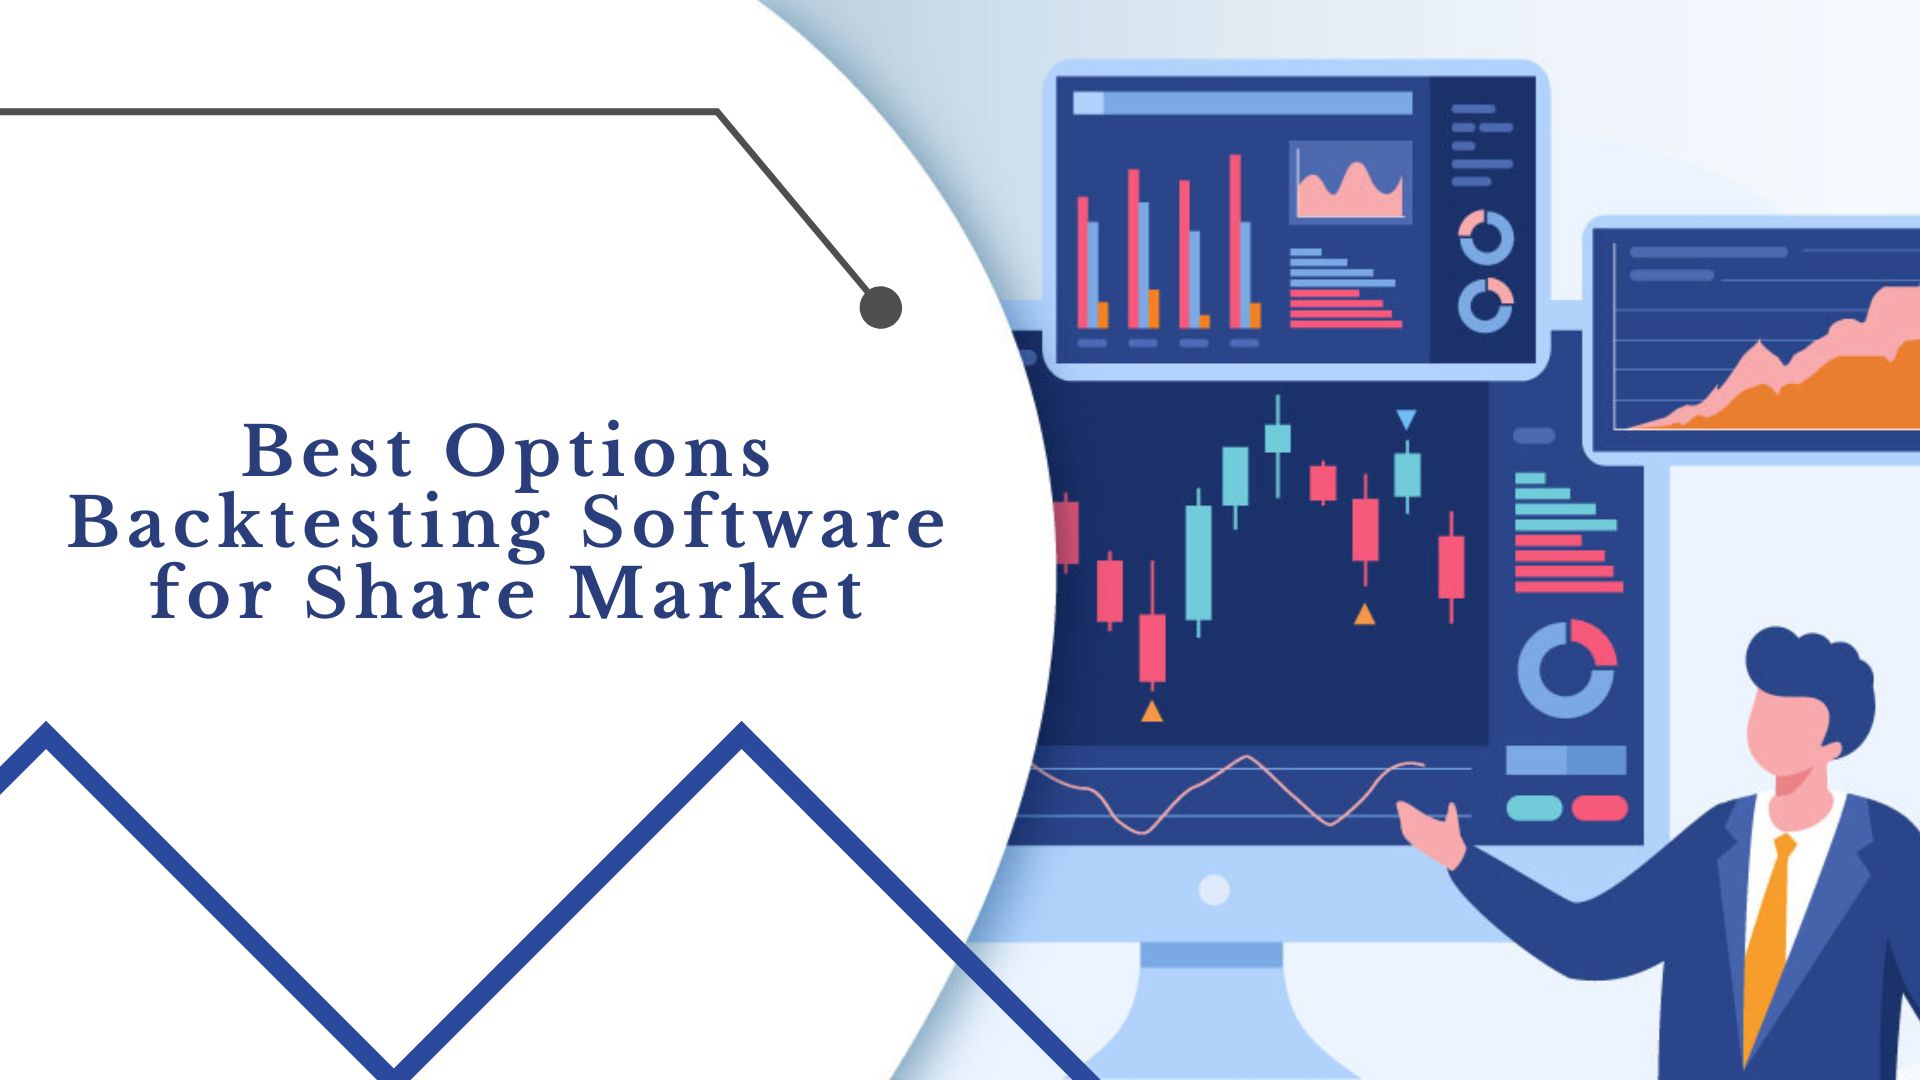 Best Options Backtesting Software for Share Market